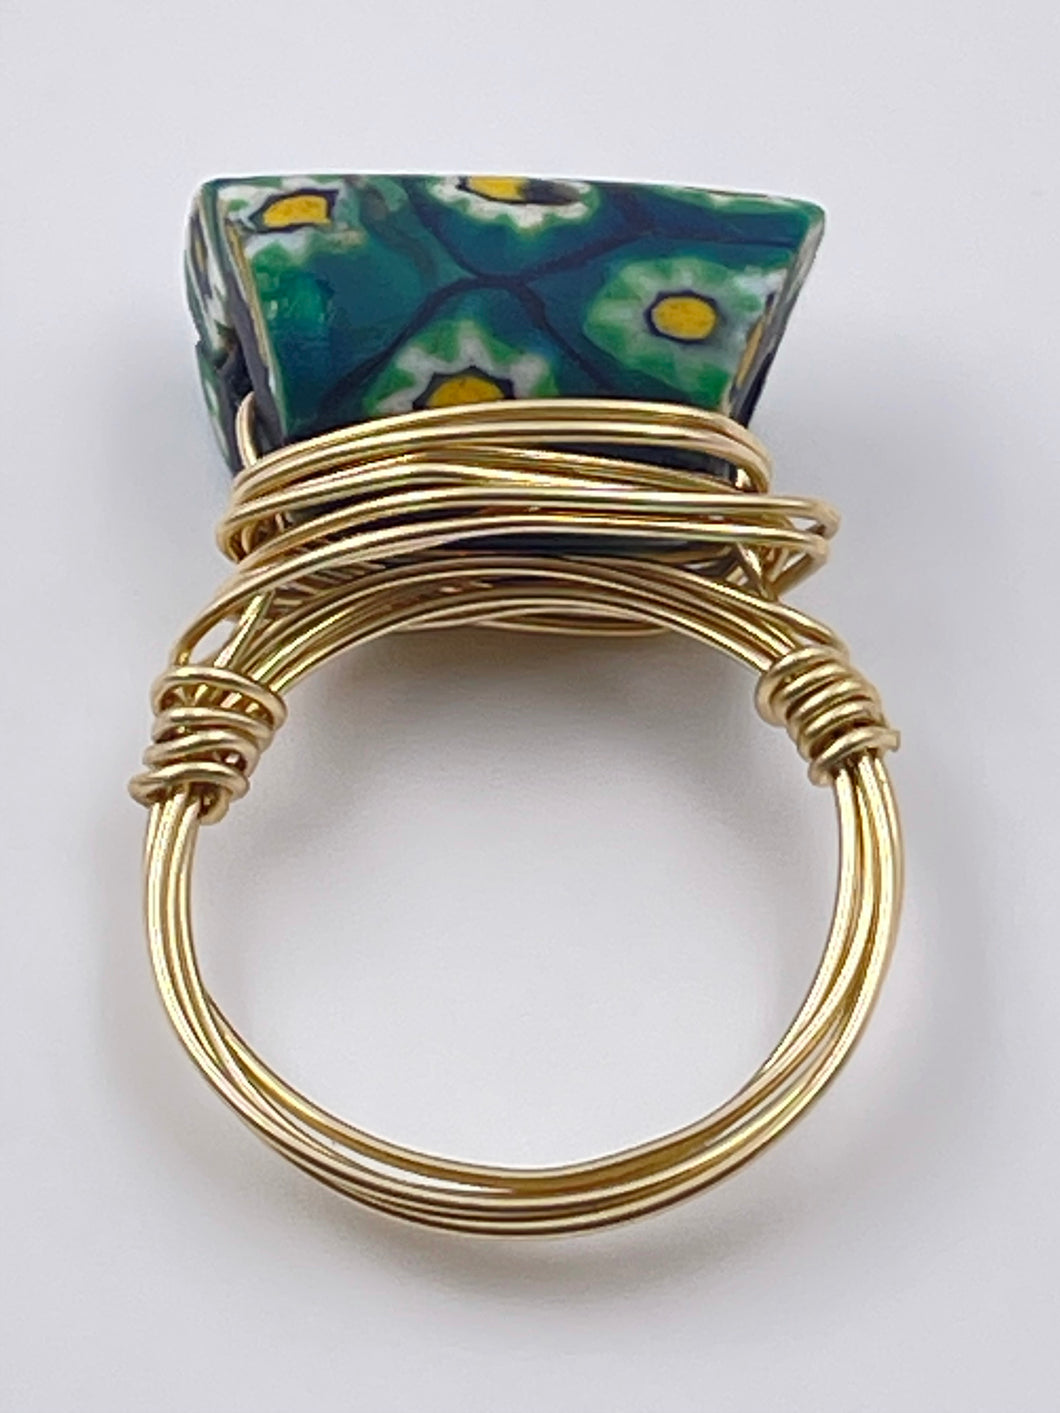 Antique Green & Yellow Venetian Ring